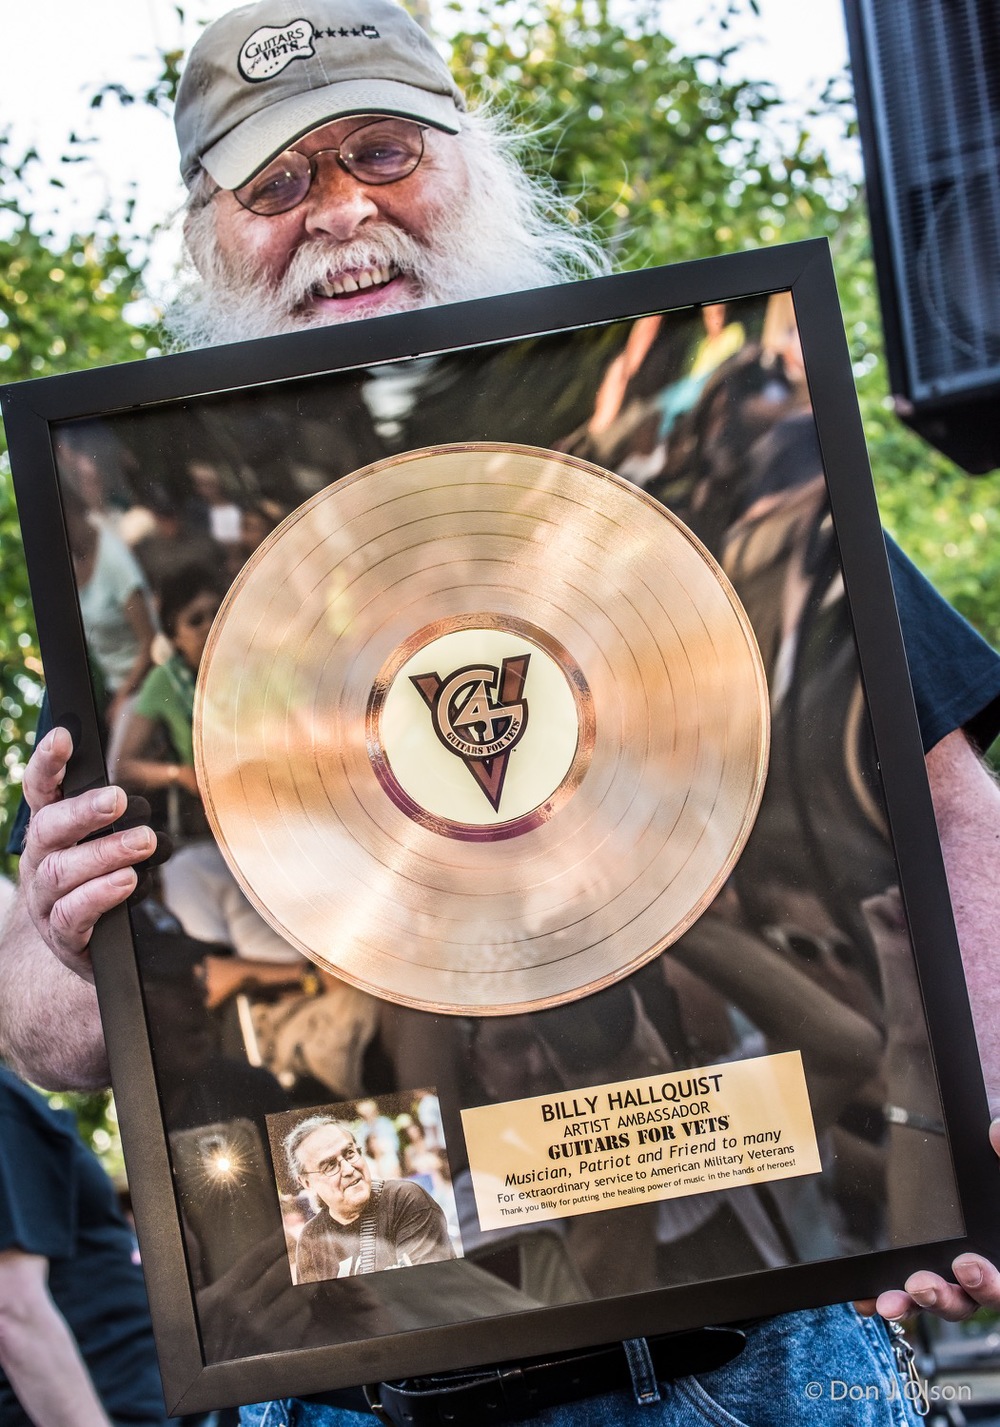  Mike DesLauriers / BILLY HALLQUIST - ARTIST AMBASSADOR - GUITARS FOR VETS - Gold Record Award / The Veterans' Memorial Wolfe Park Amphitheater / St. Louis Park, Minnesota / August 1st, 2015 